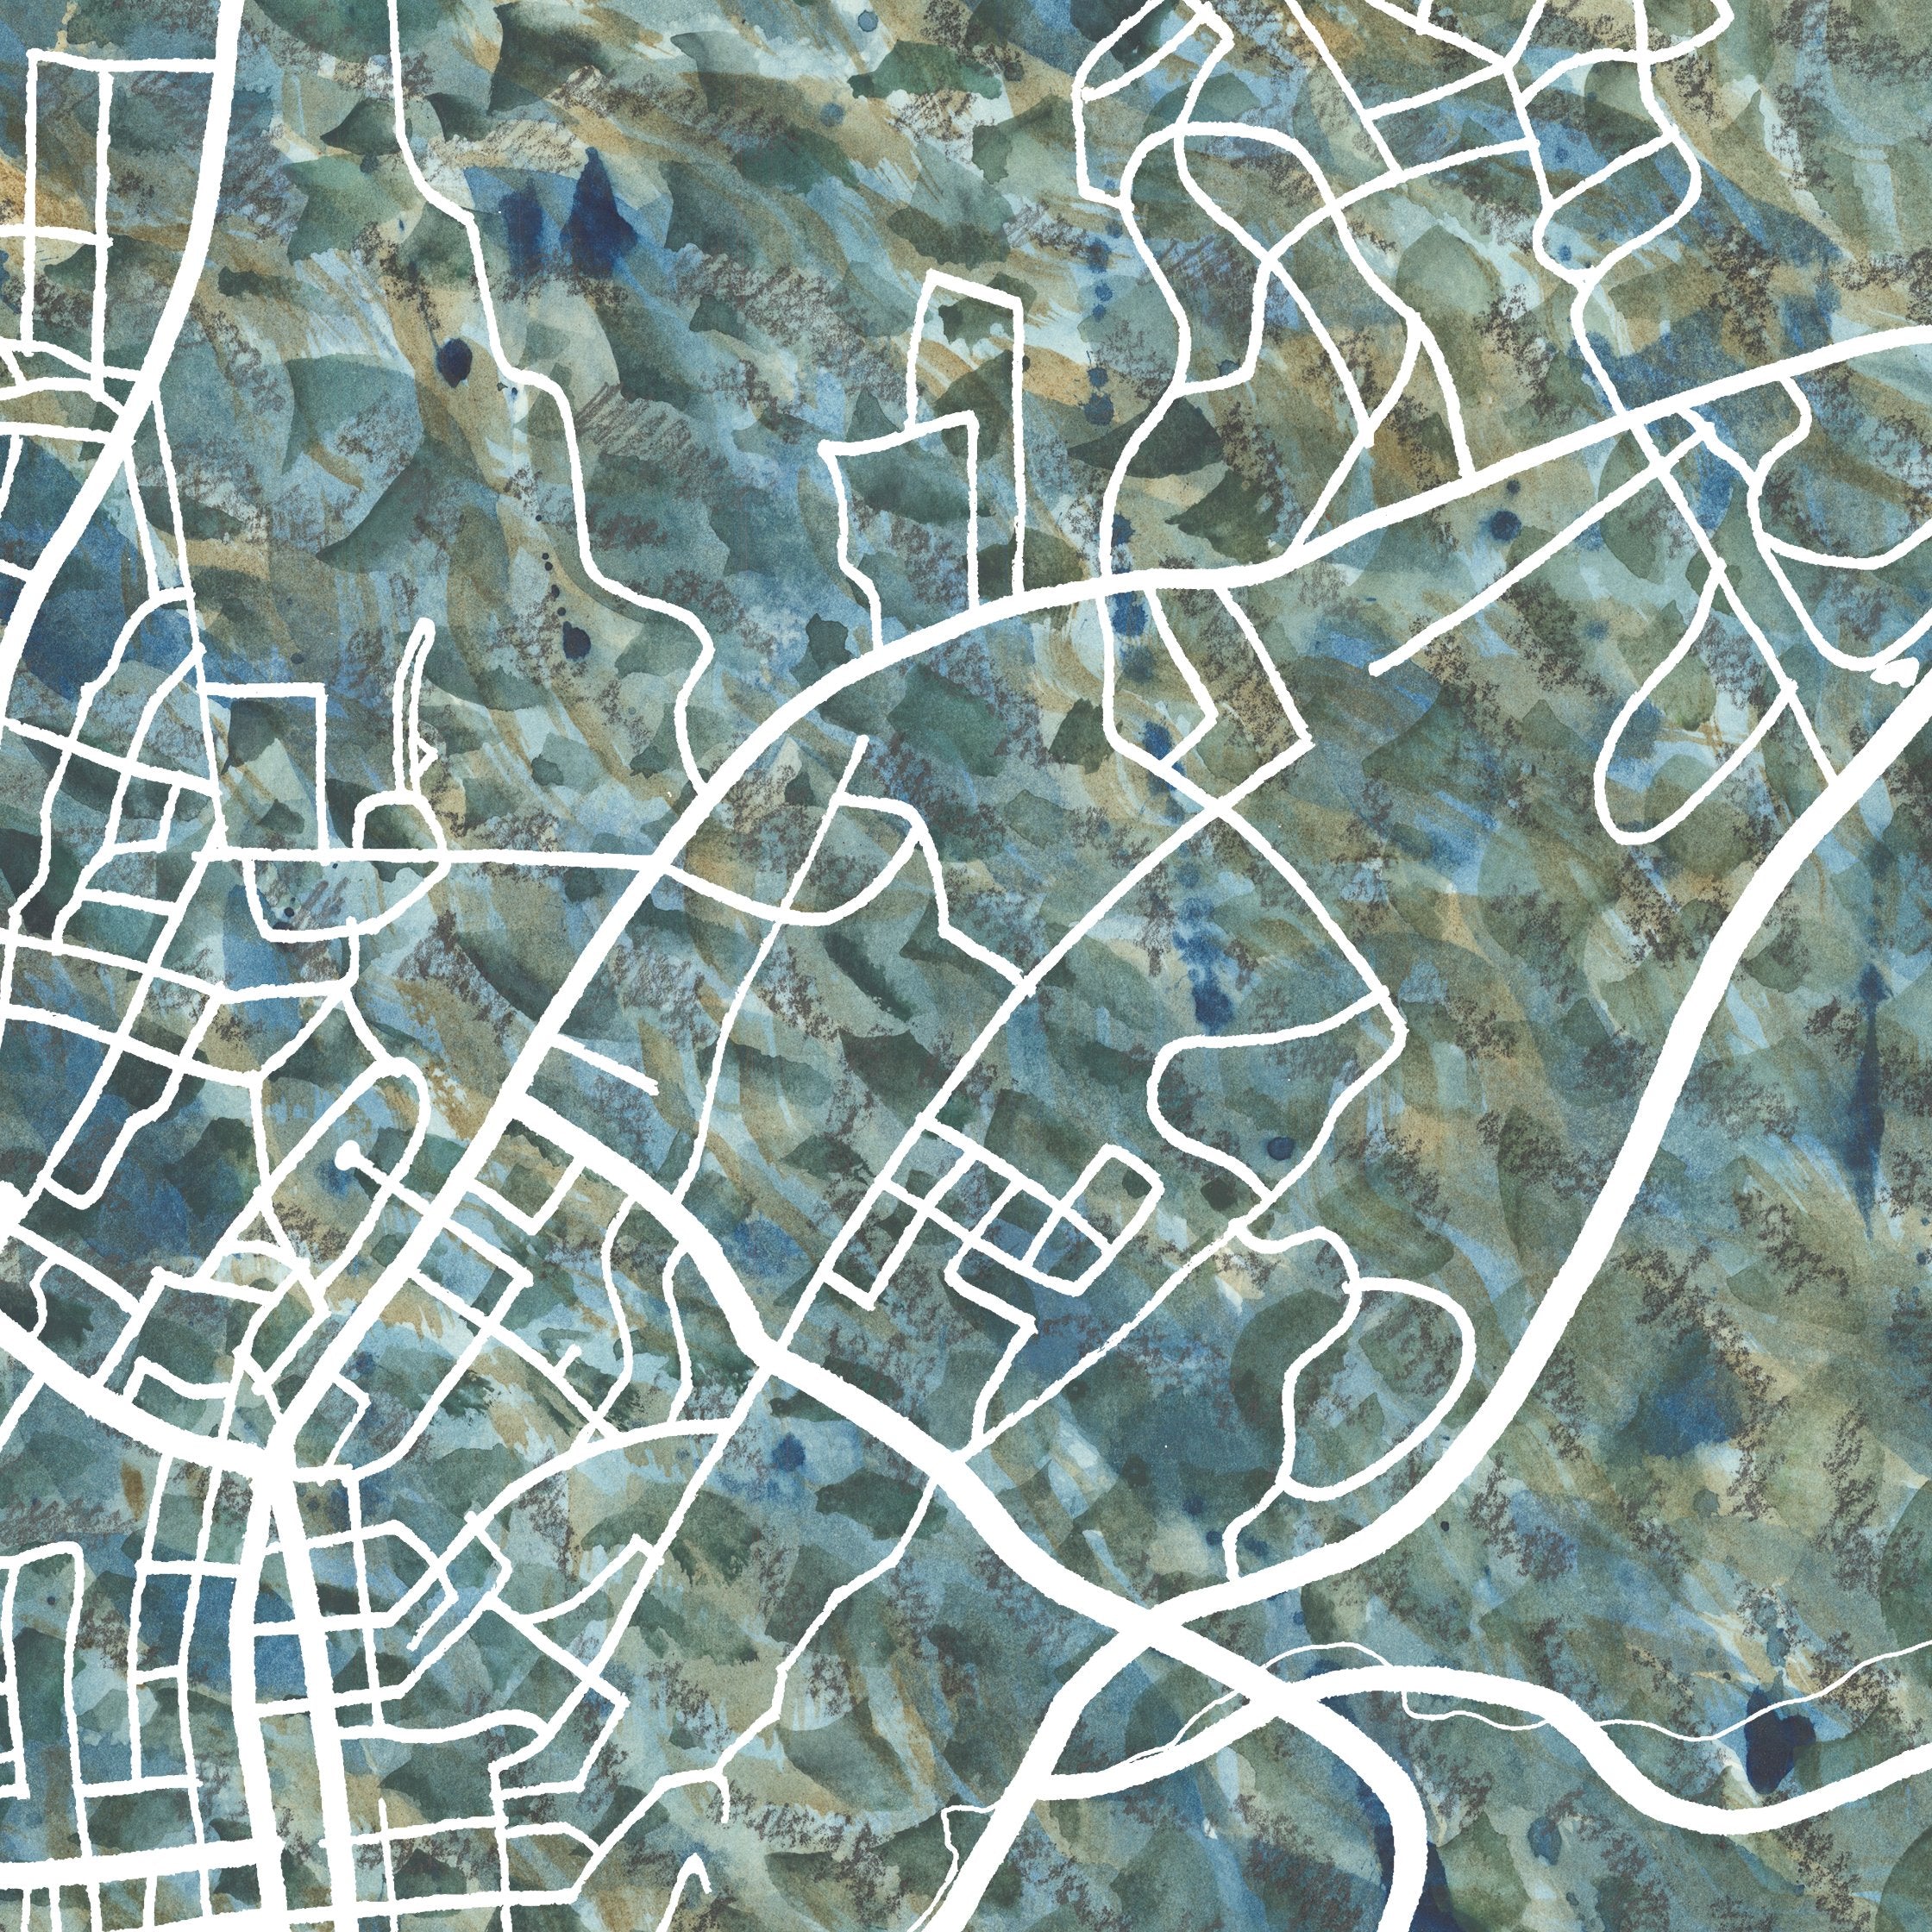 STAUNTON Urban Fabrics City Map: PRINT